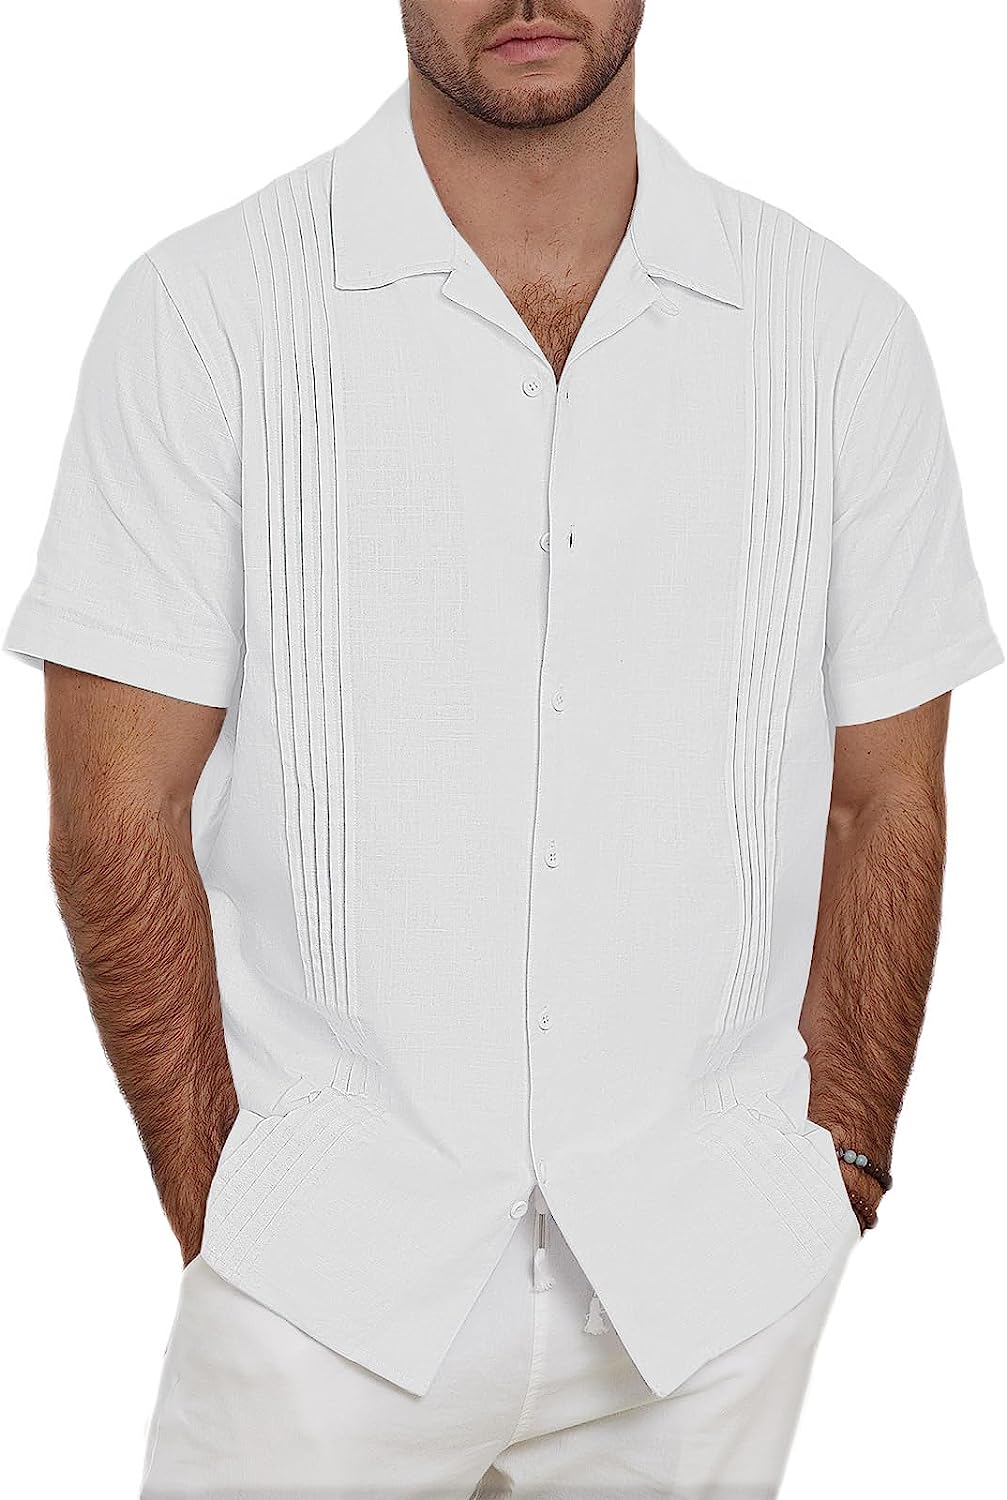 JEKAOYI Button Down Linen Short Sleeve Shirts for Men Casual Pleated ...